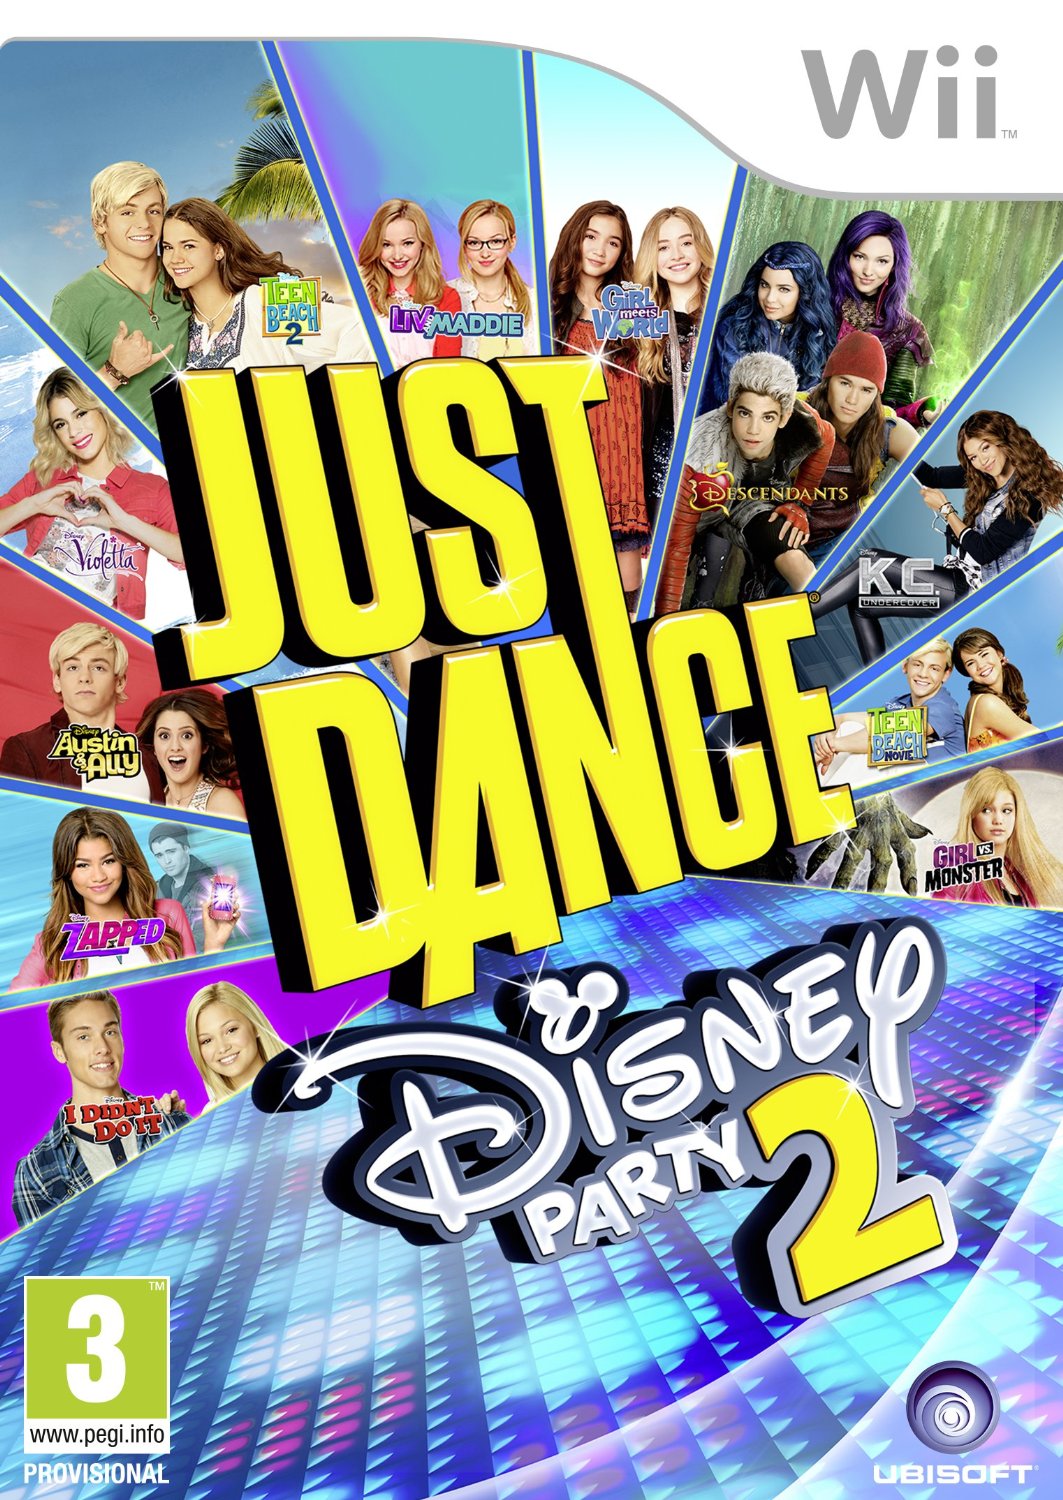 Just Dance: Disney Party 2 (Wii), Ubisoft